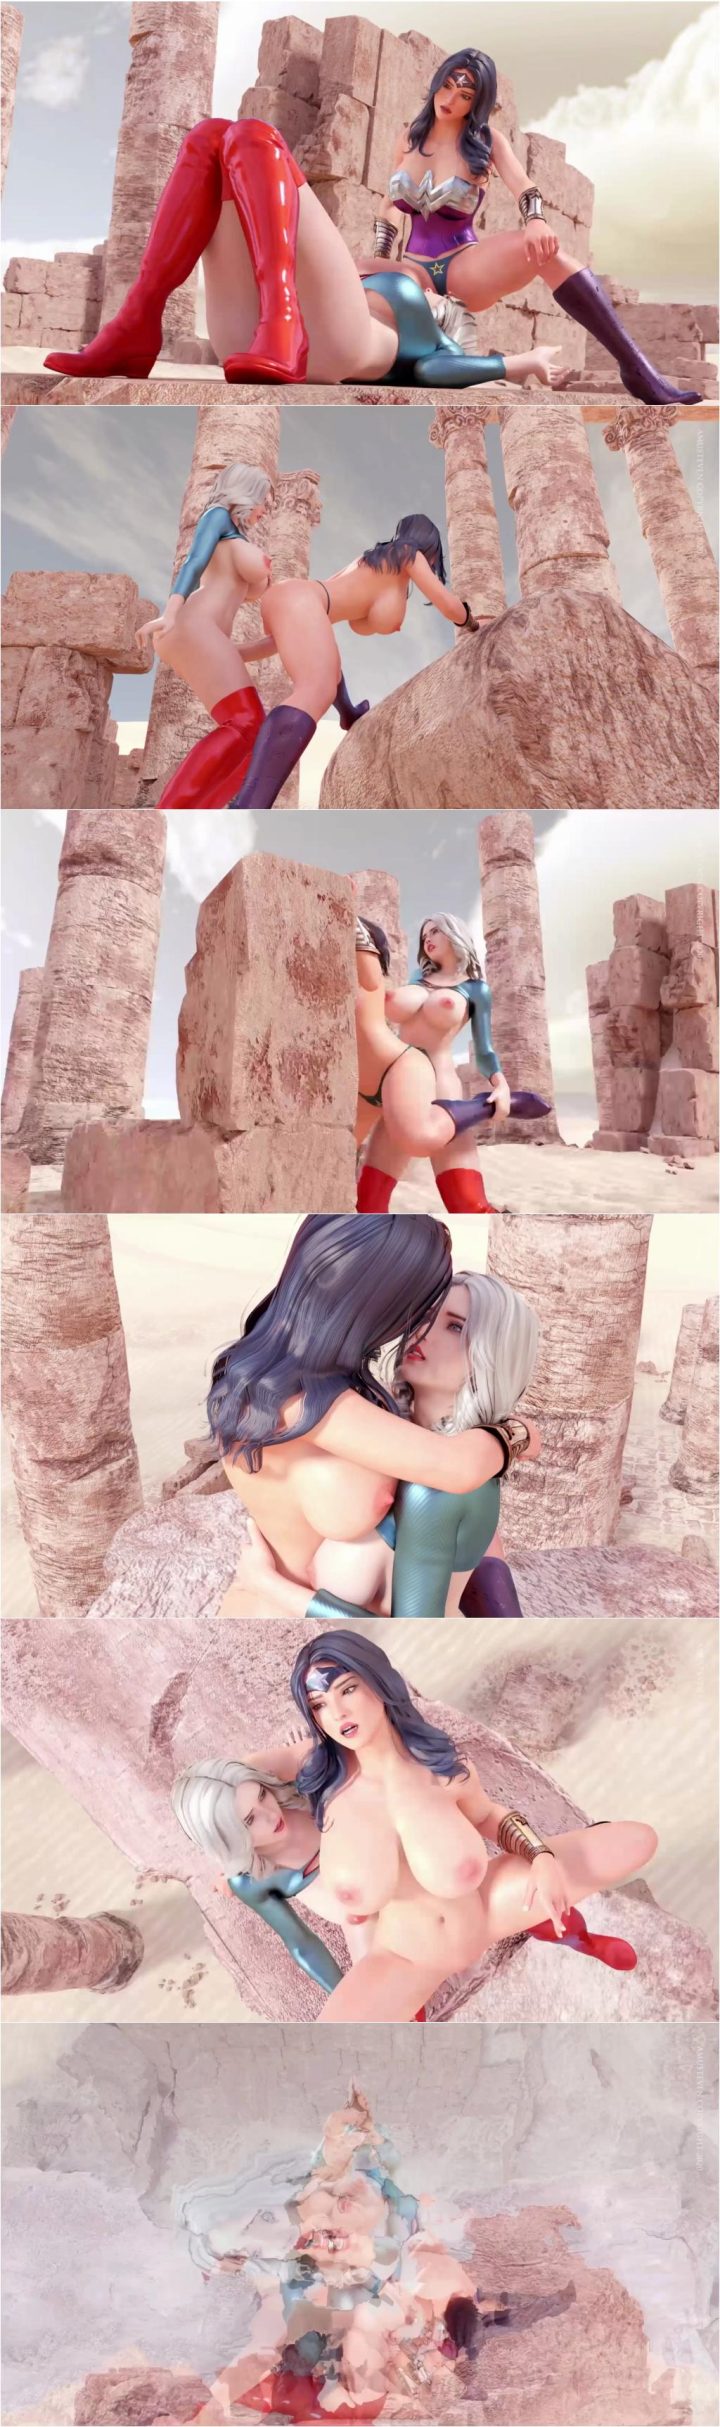 Hentai 3D Fantasy Porn Videos